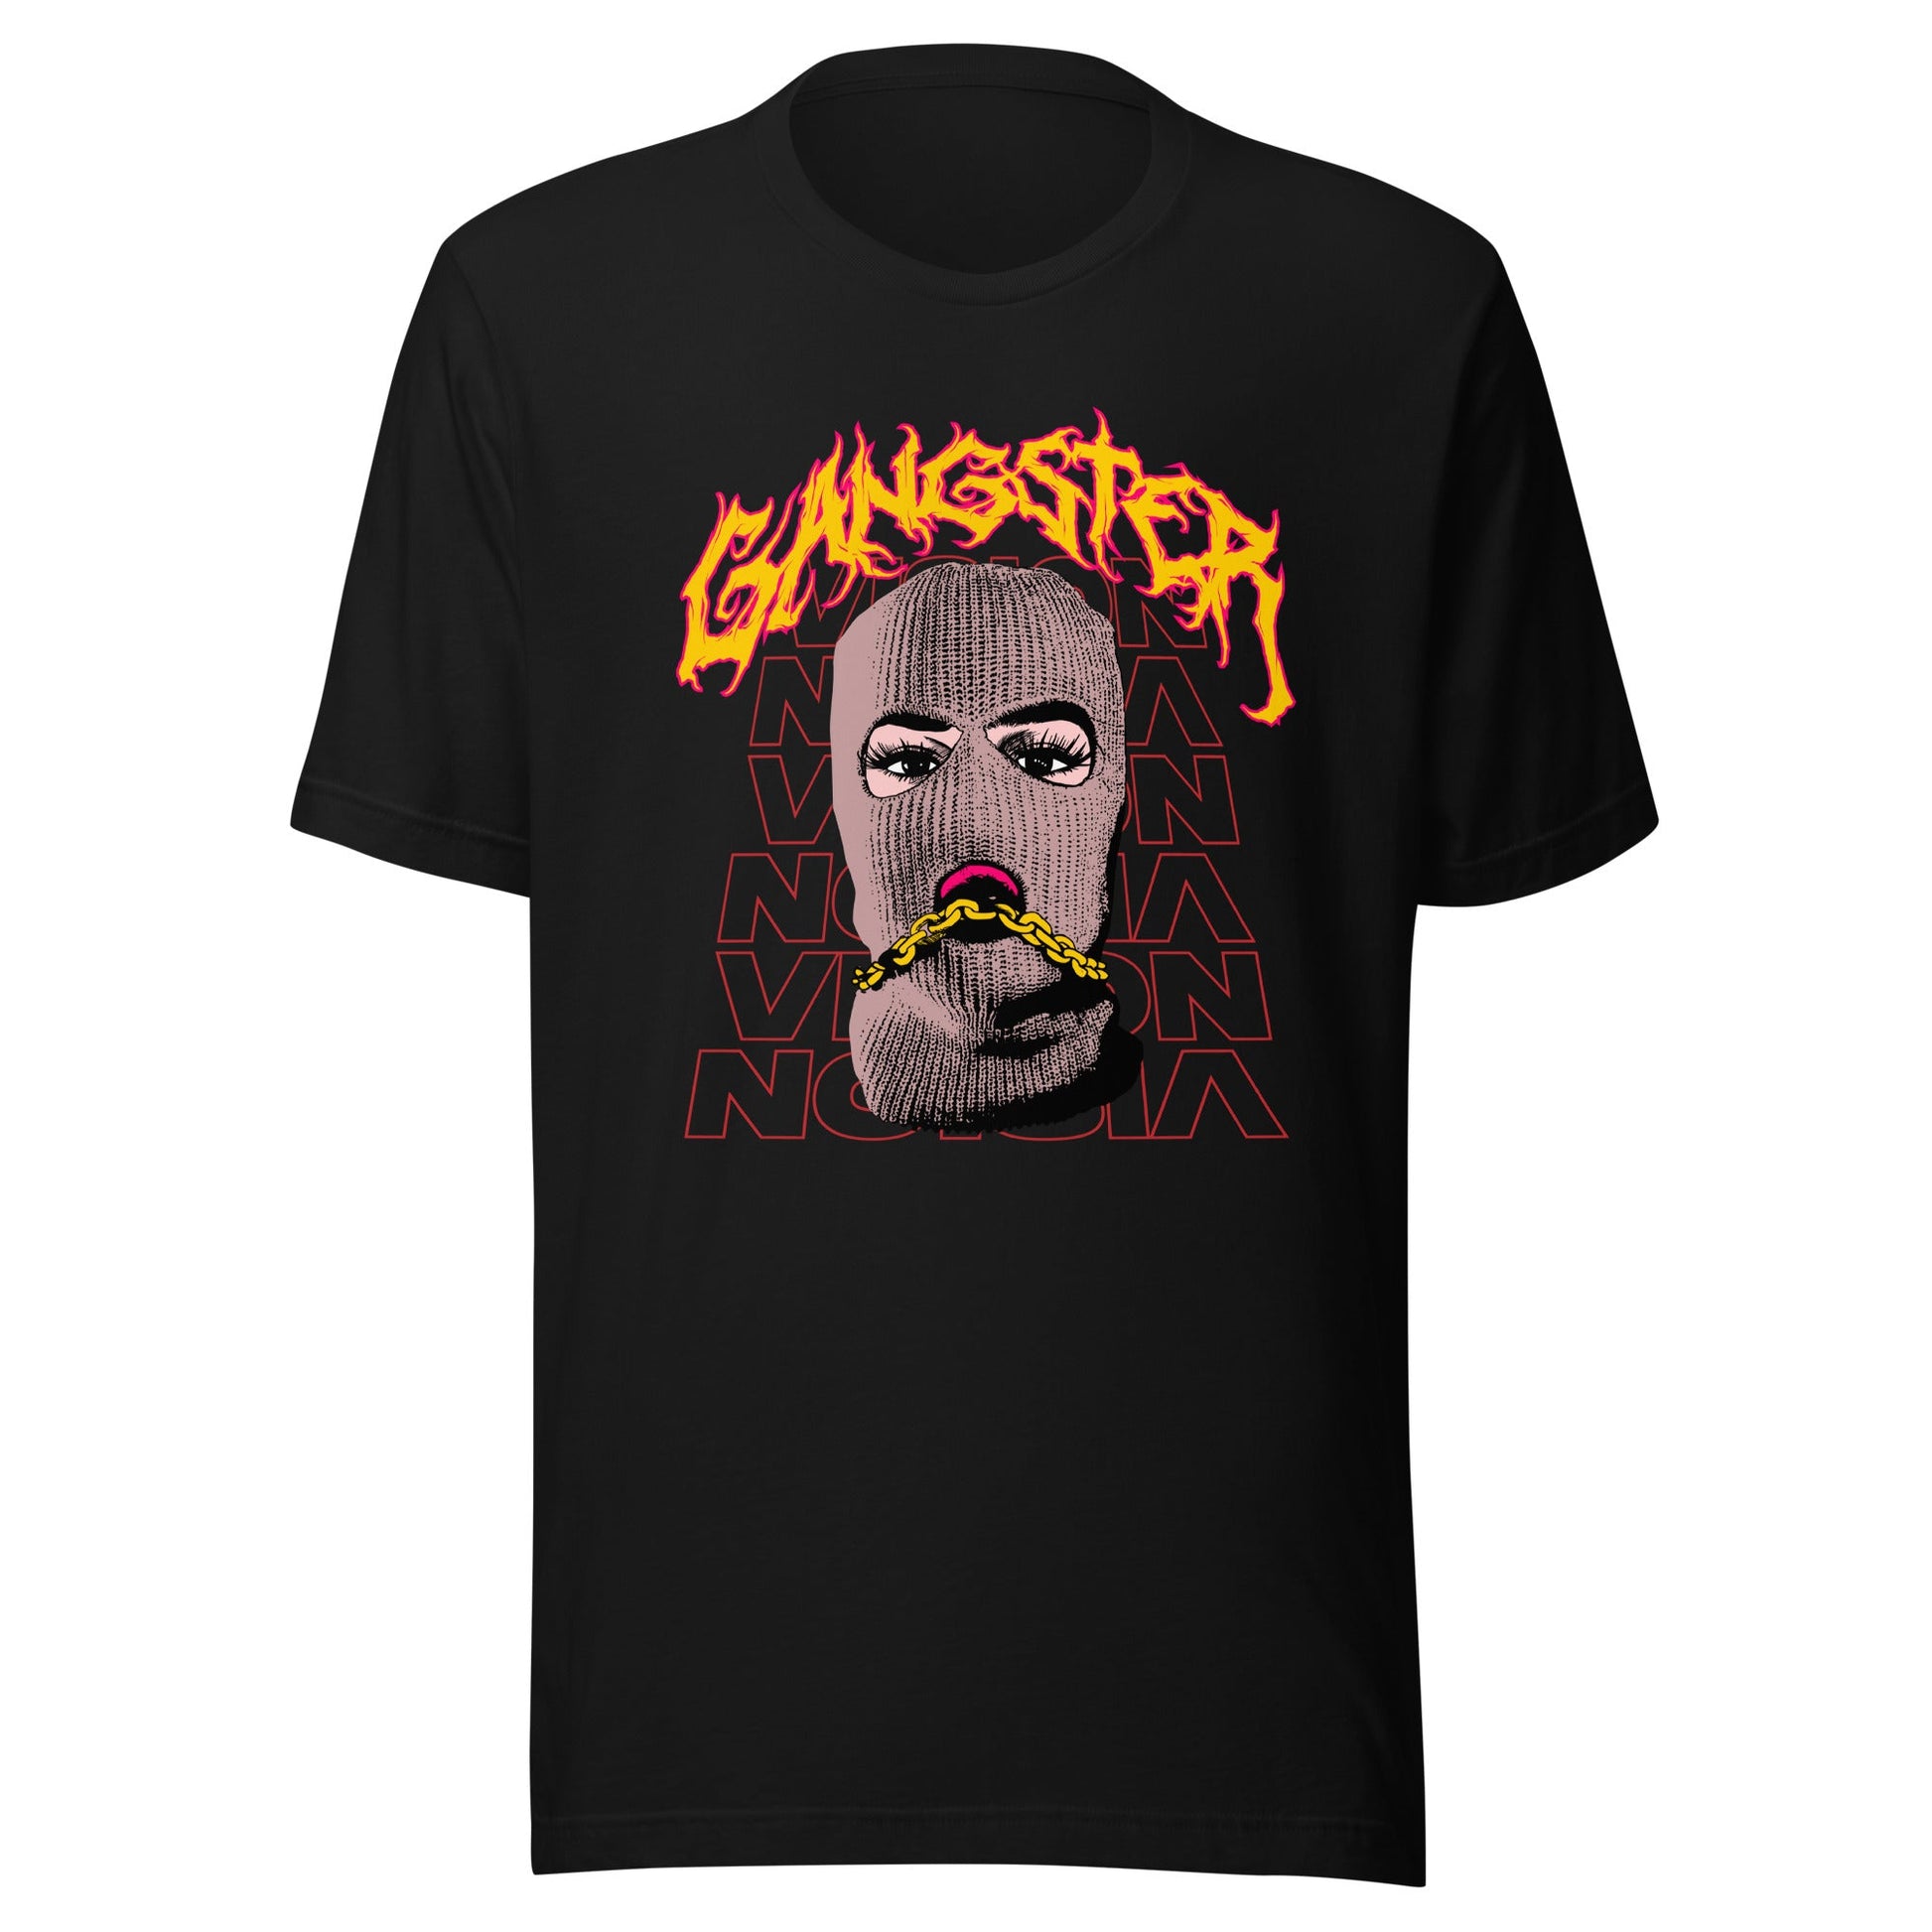 Gangster Unisex T-Shirt - Stylish Urban Streetwear Tee for Men and Women